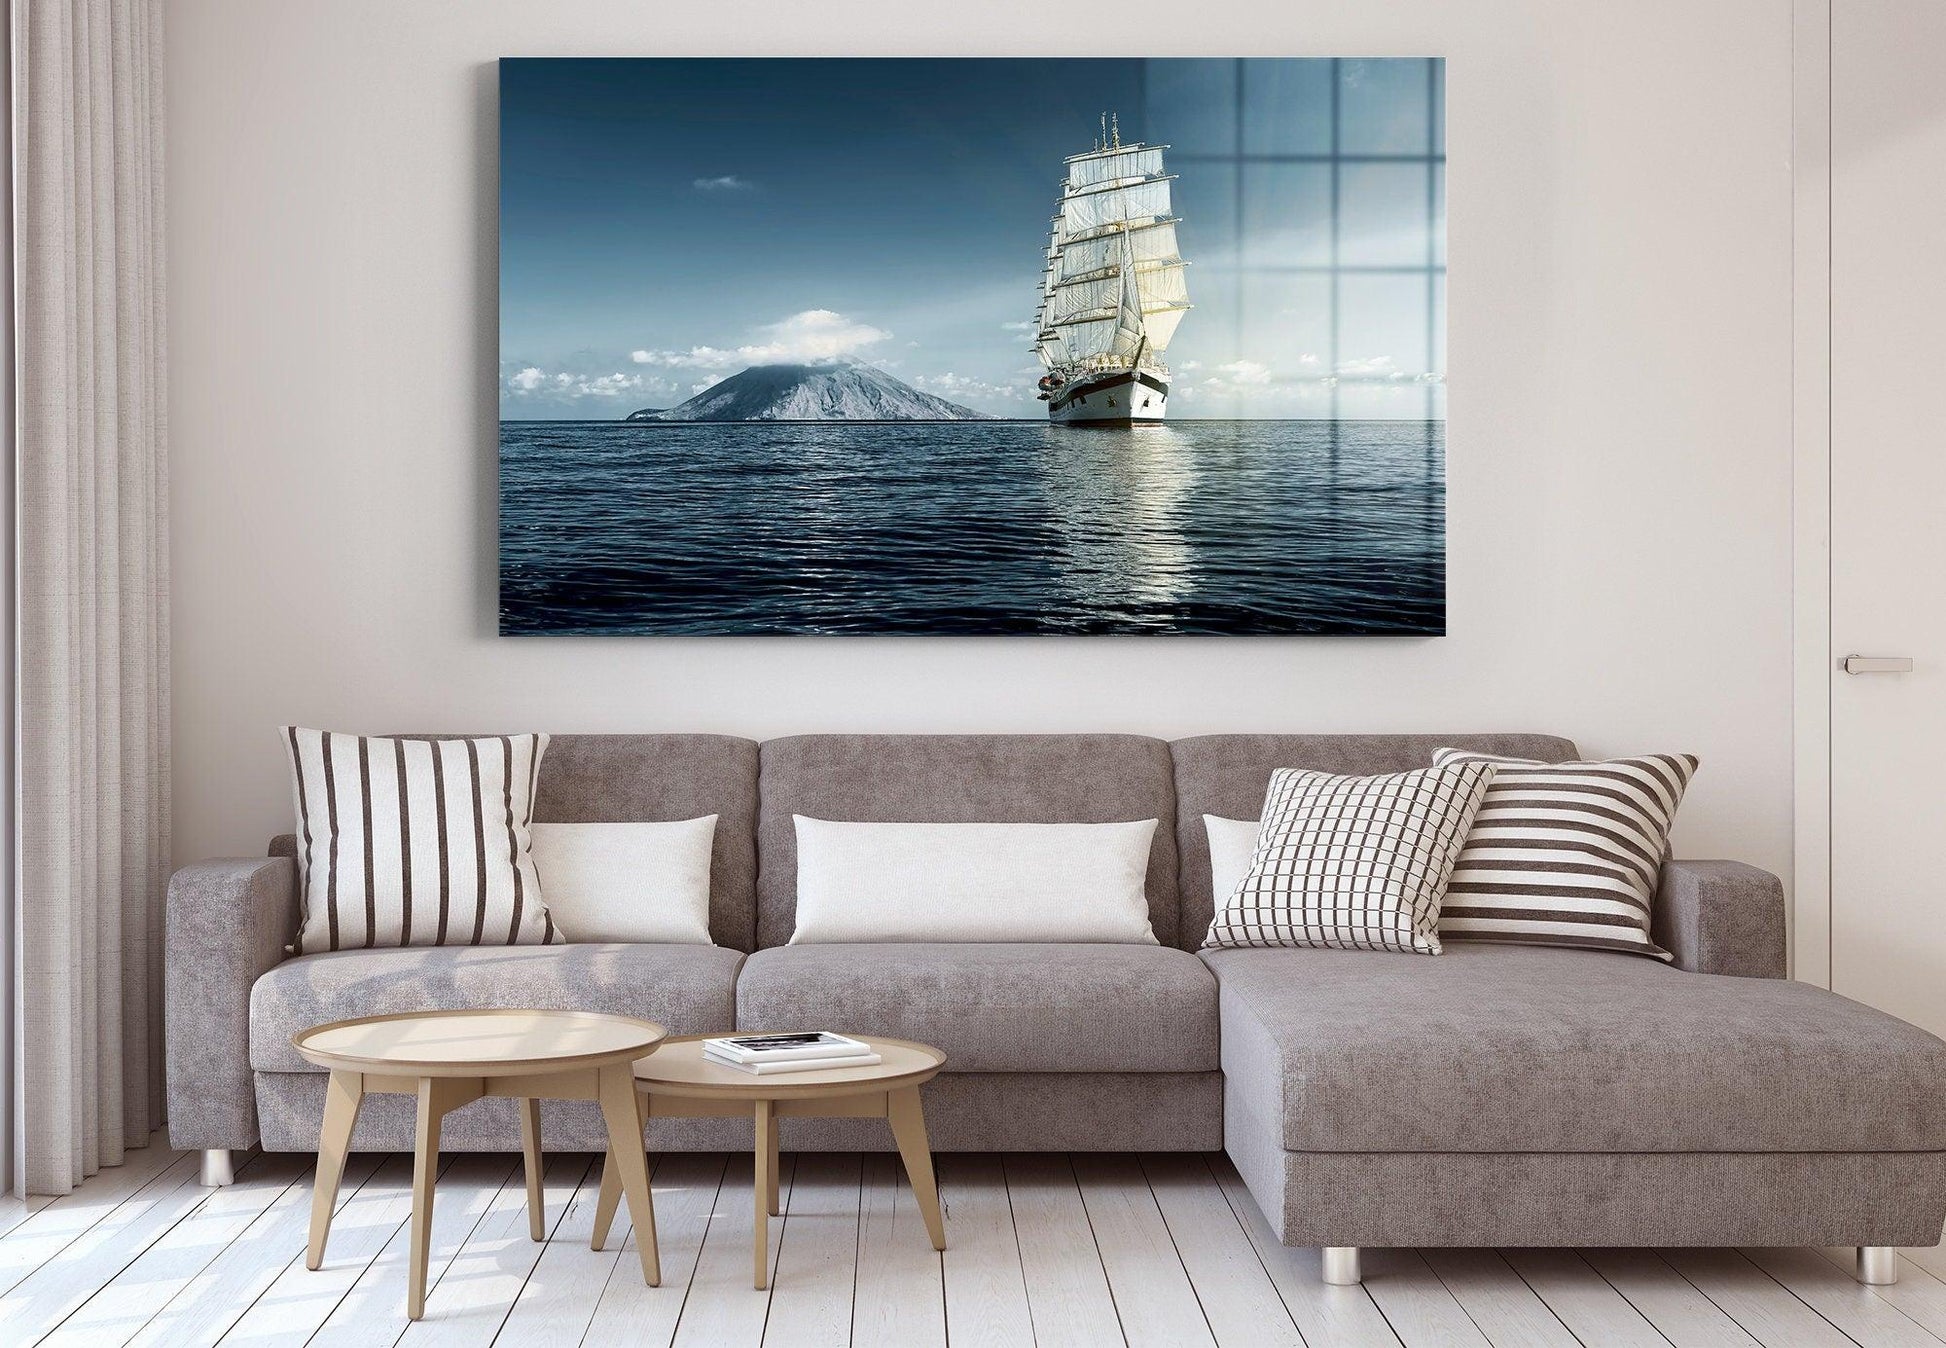 boat Tempered Glass Printing| sailing Boat on sea Wall art, Modern Wall Art, simple wall decor, glass printing, beautiful scenery wall art - TrendiArt